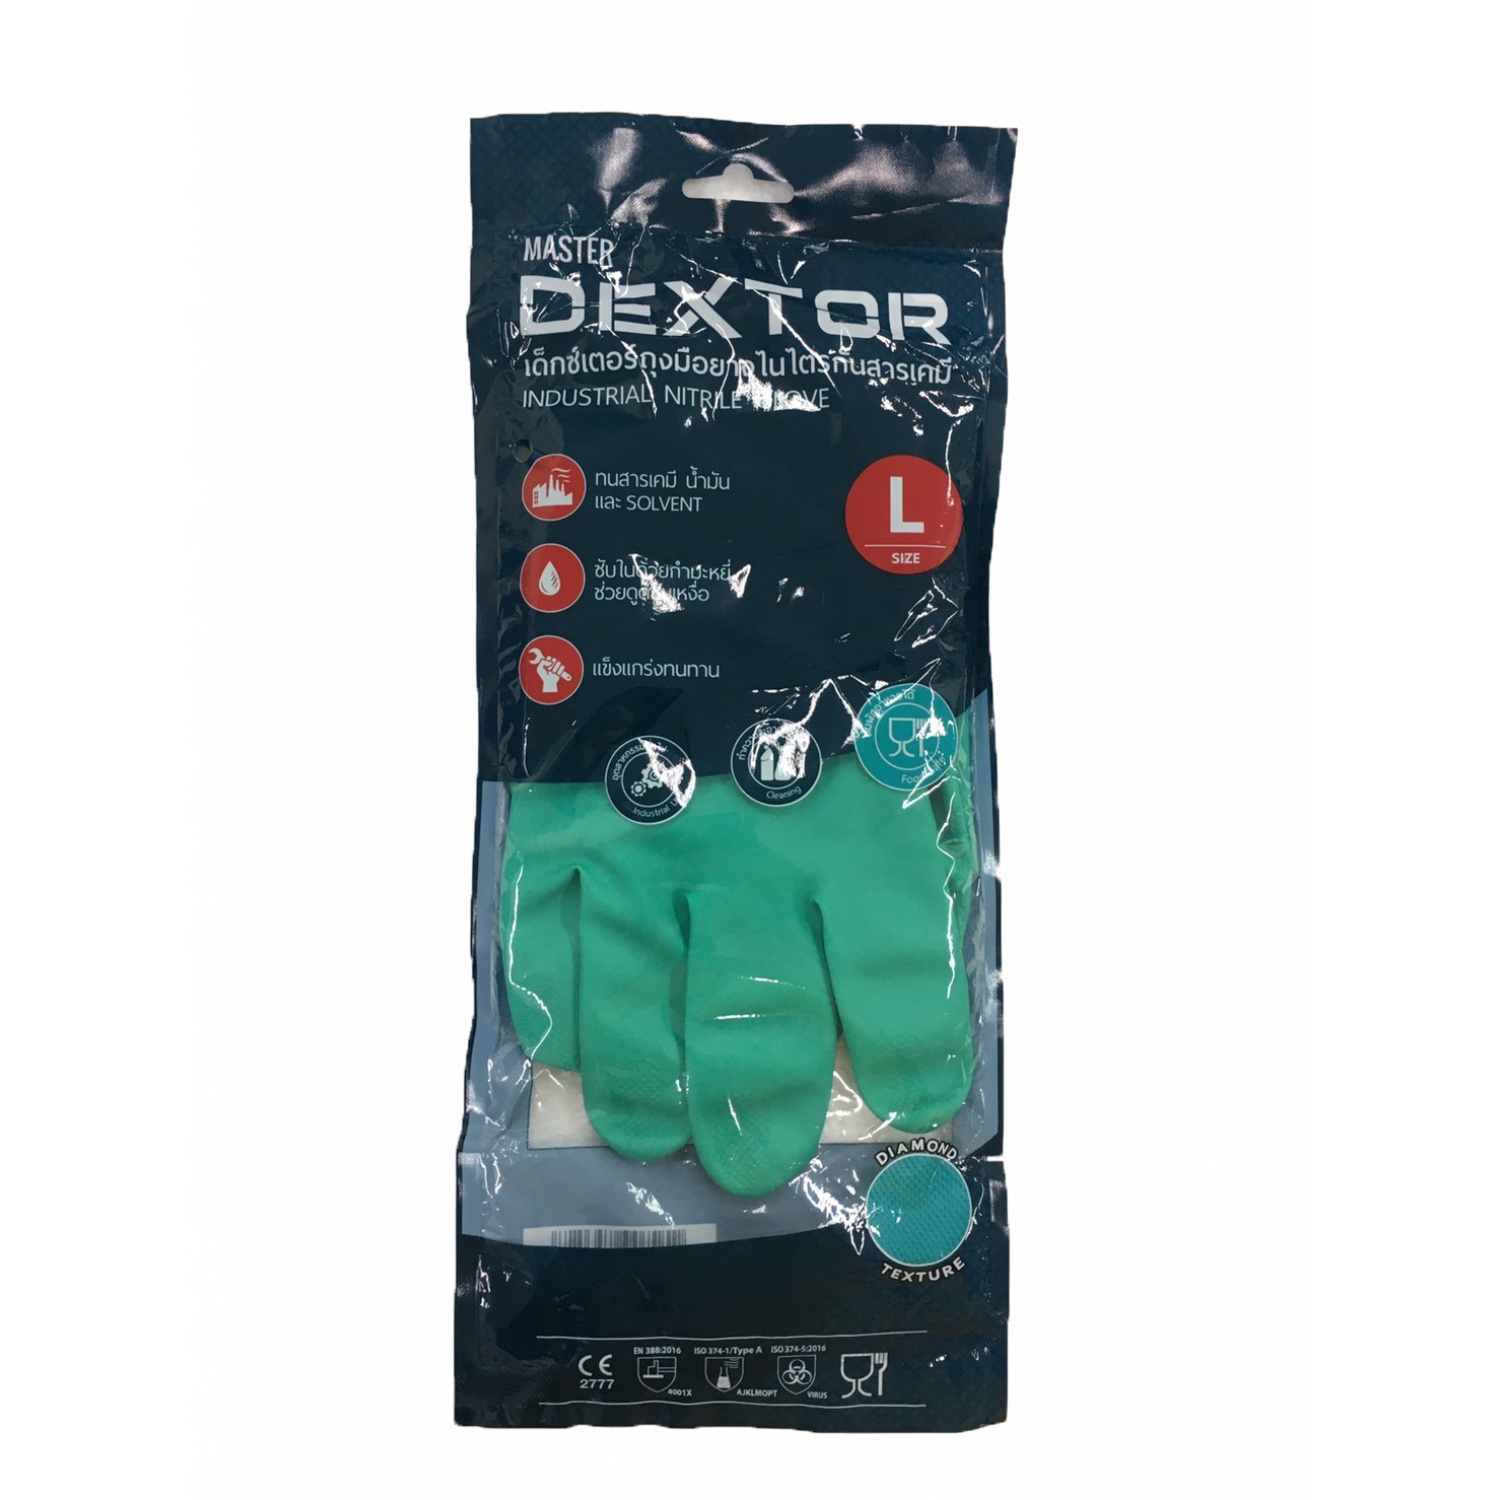 MASTER DEXTOR ถุงมือยางไนไตรกันสารเคมี ซับใน Size L ยาว 13 นิ้ว สีเขียว